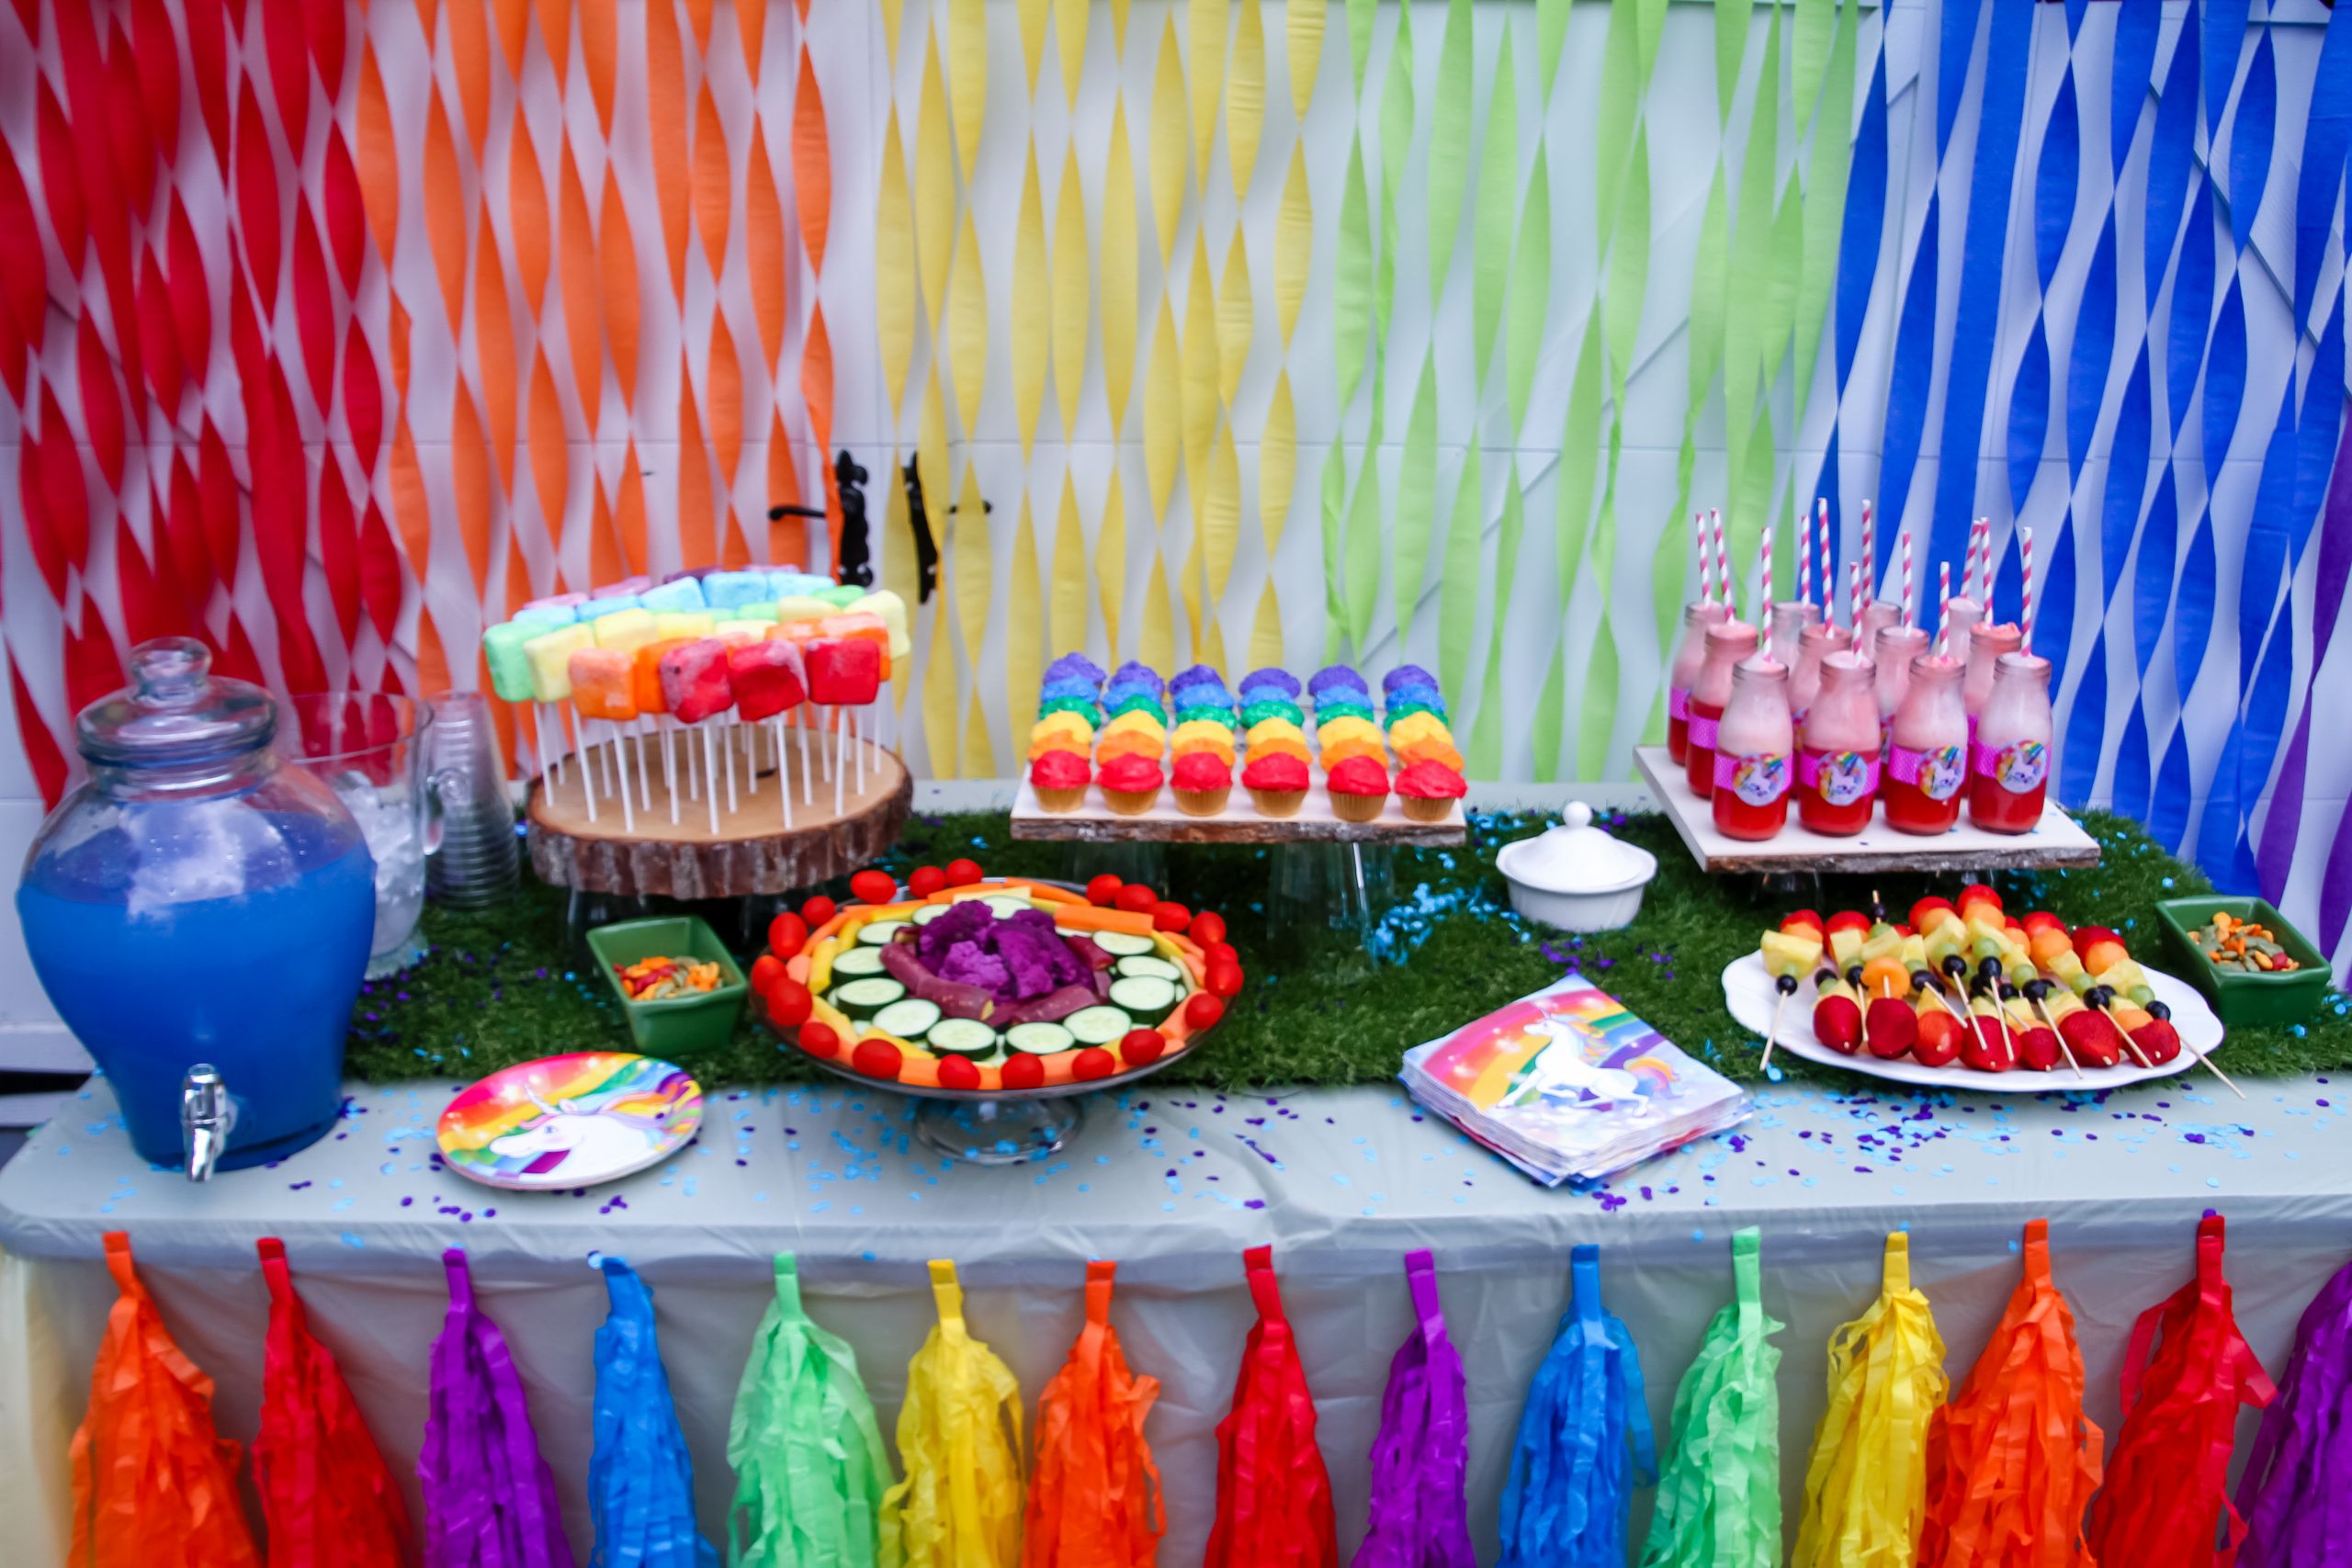 Rainbow Unicorn Party Ideas
 Throw the ultimate unicorn rainbow unicorn party for a